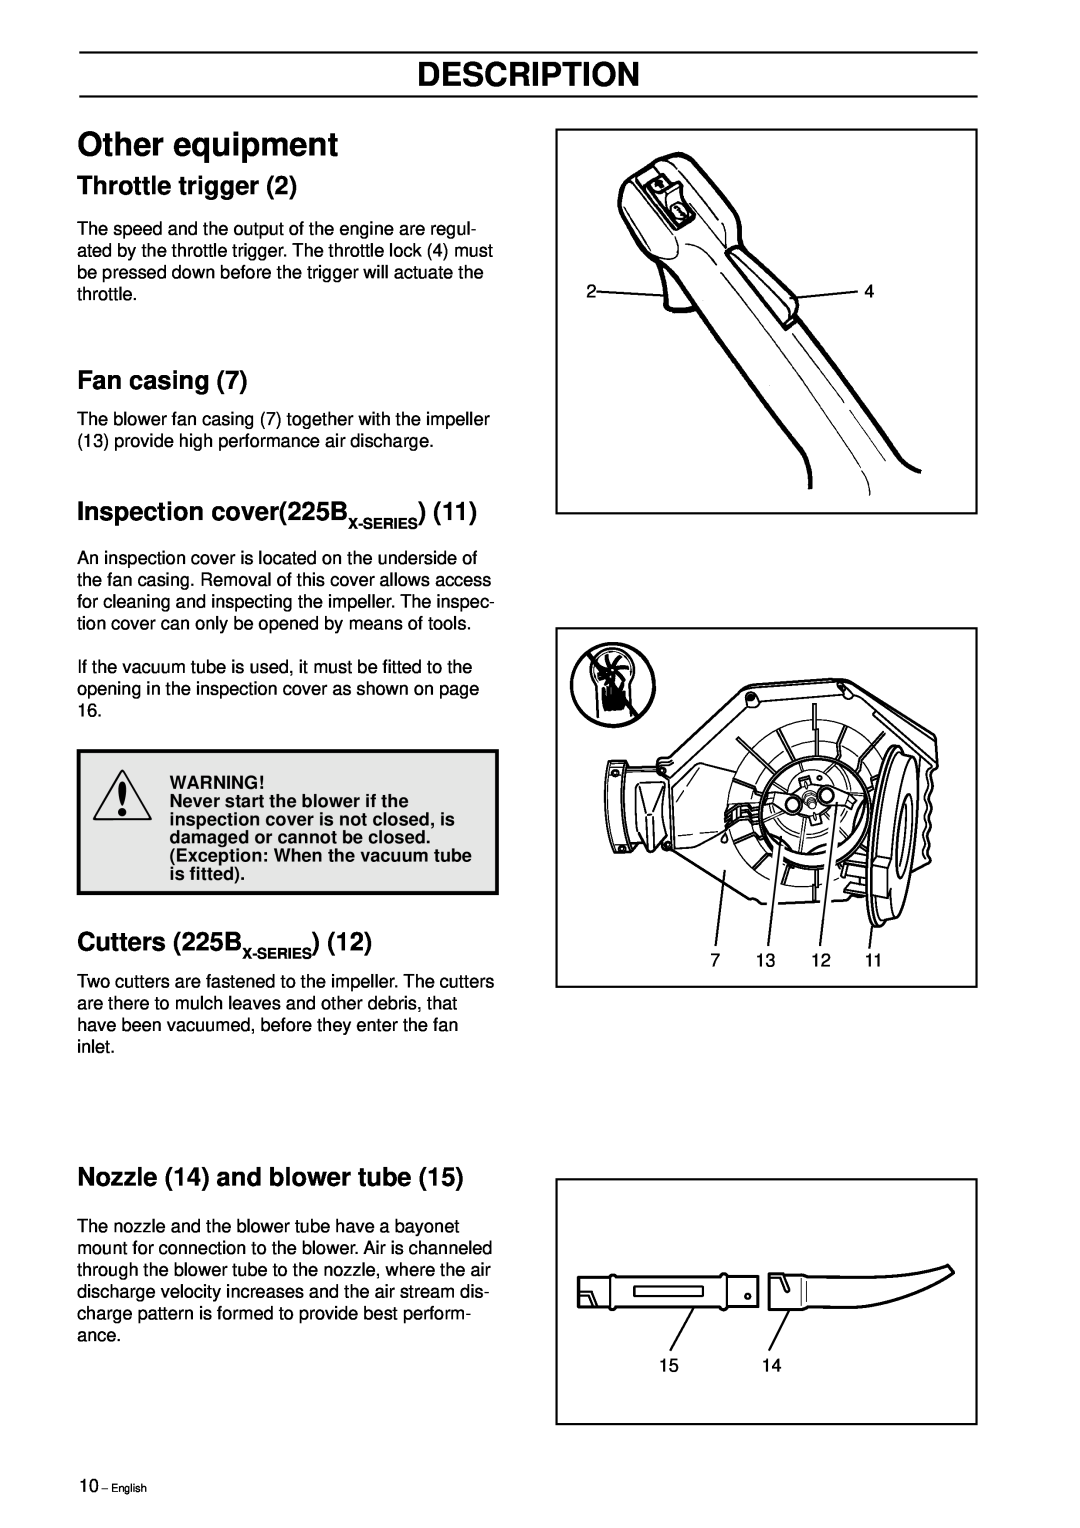 Husqvarna 225B X-Series manual Description, Other equipment, Throttle trigger, Fan casing, Inspection cover225BX-SERIES 